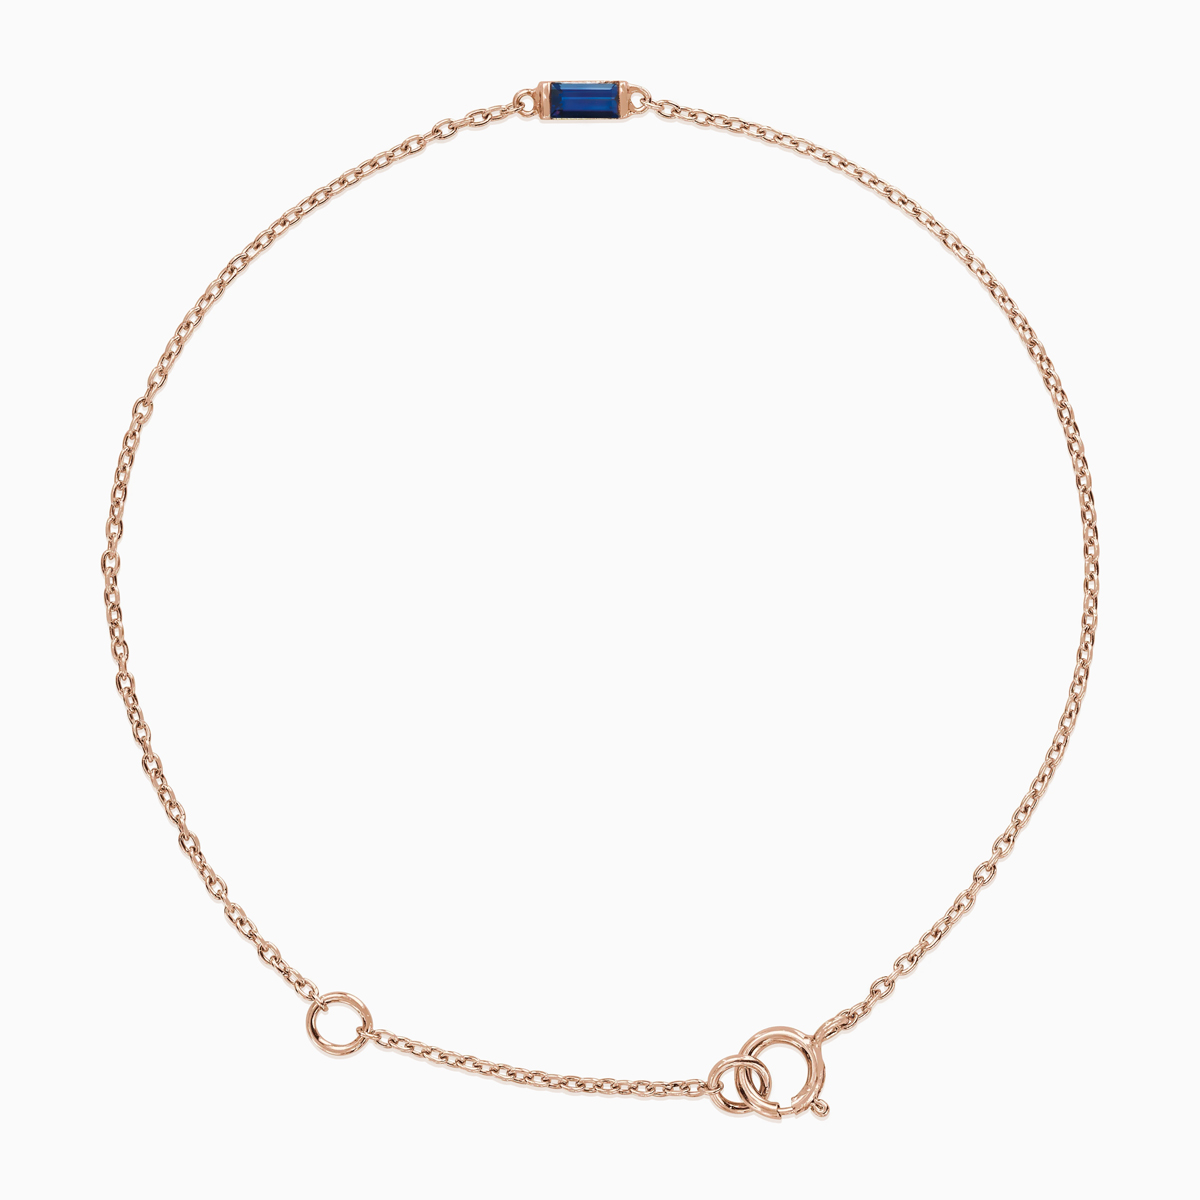 Baguette Shaped Natural Blue Sapphire accented link bracelet, 14k Gold